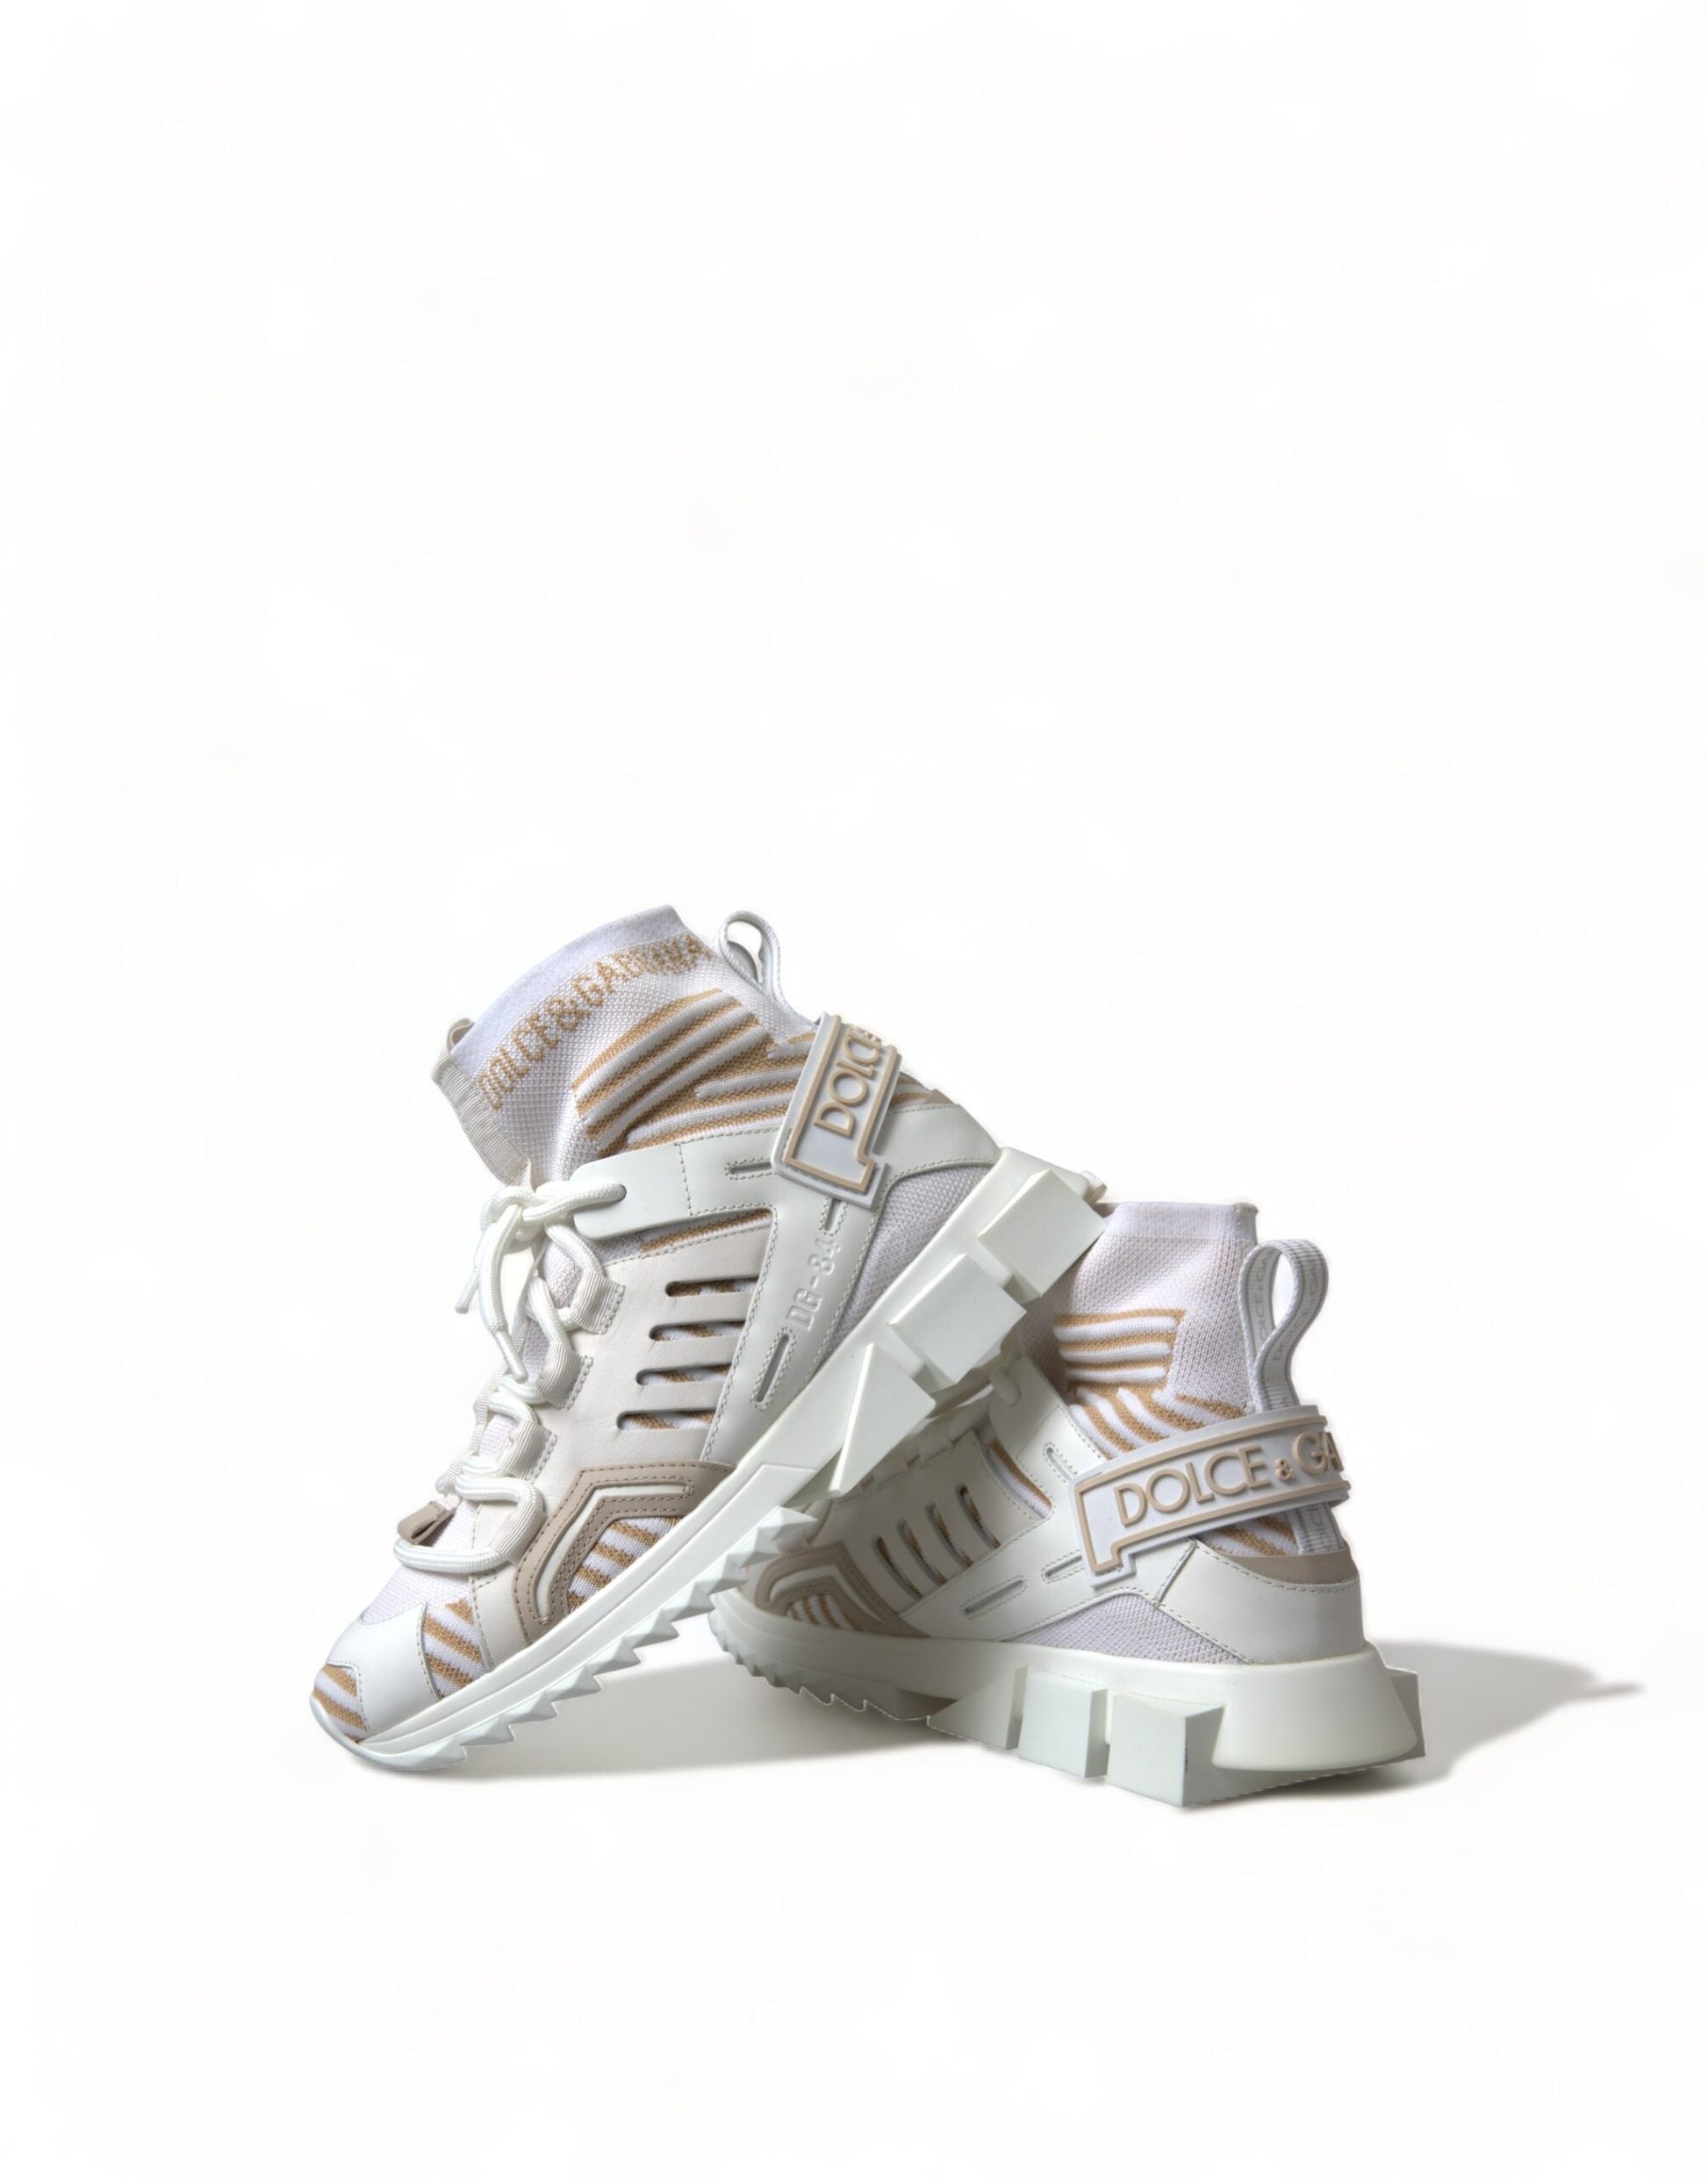 Fashionsarah.com Fashionsarah.com Dolce & Gabbana White Beige Sorrento Socks Sneakers Shoes